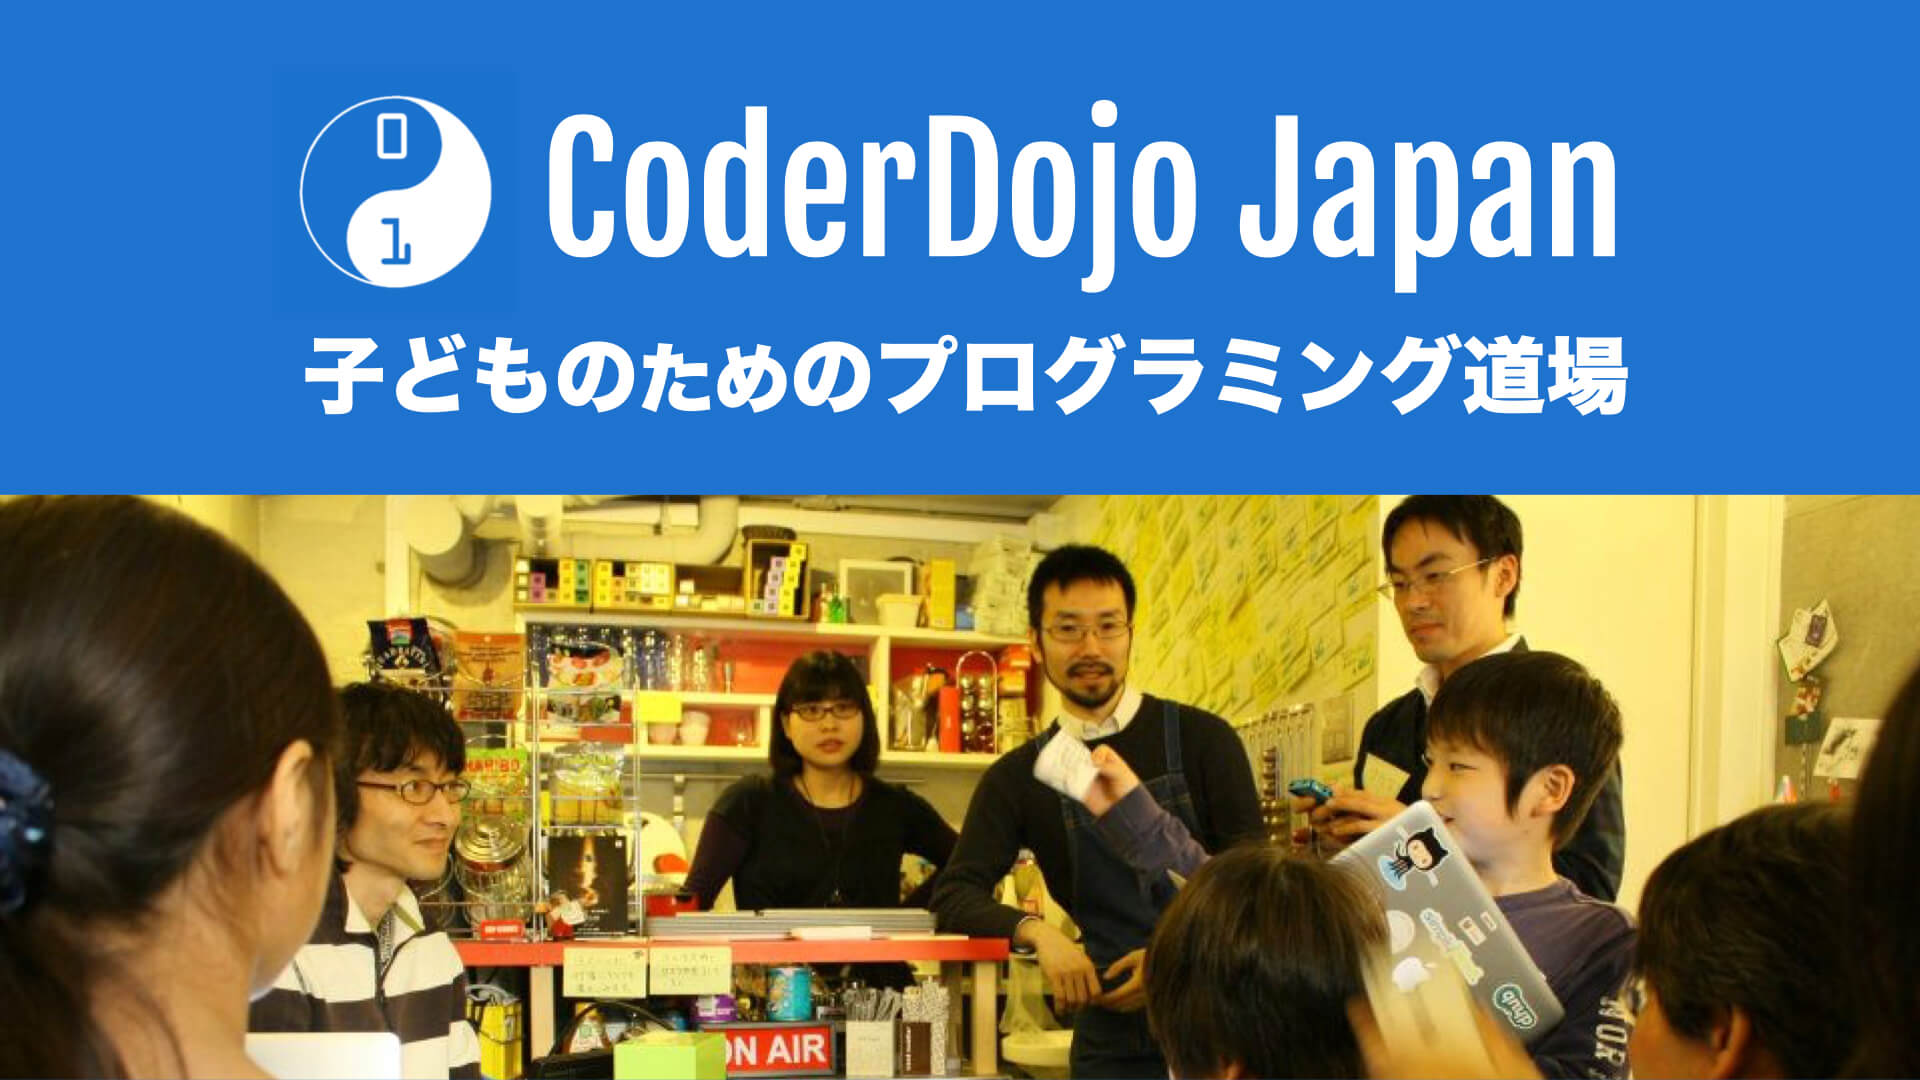 ☯️ 子どものためのプログラミング道場『CoderDojo』について - CoderDojo Japan